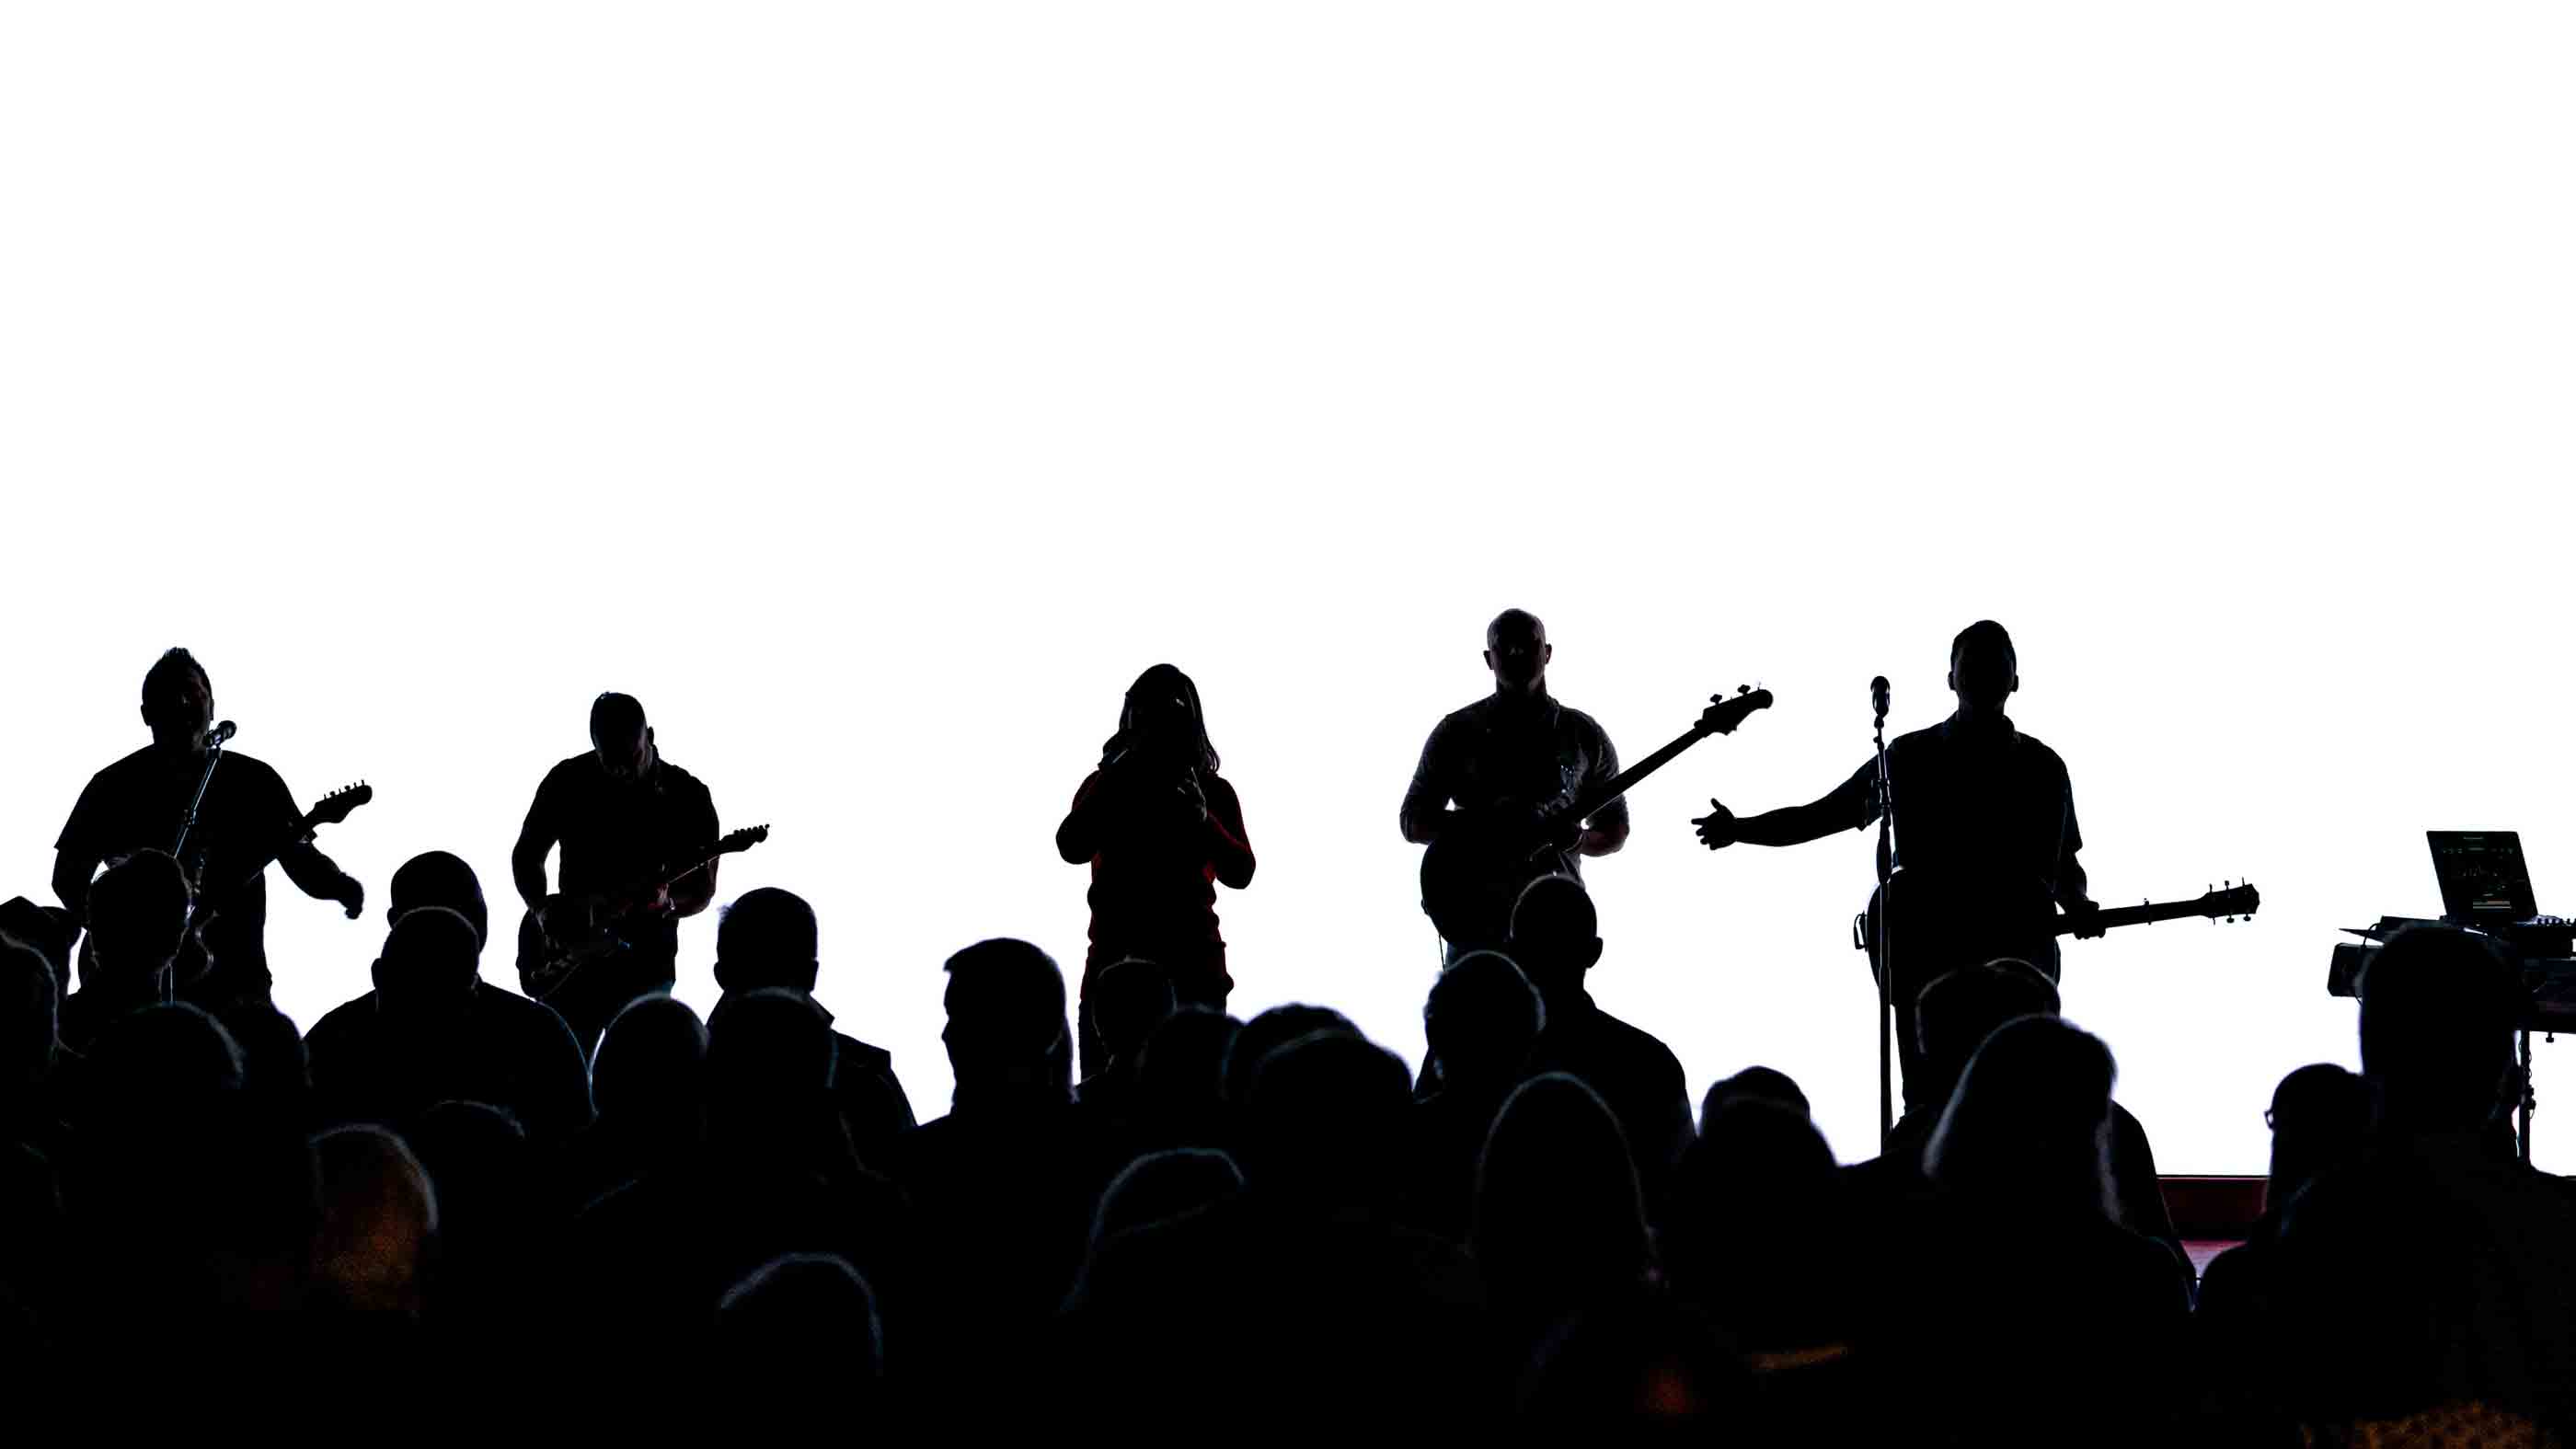 Musicians in silhouette